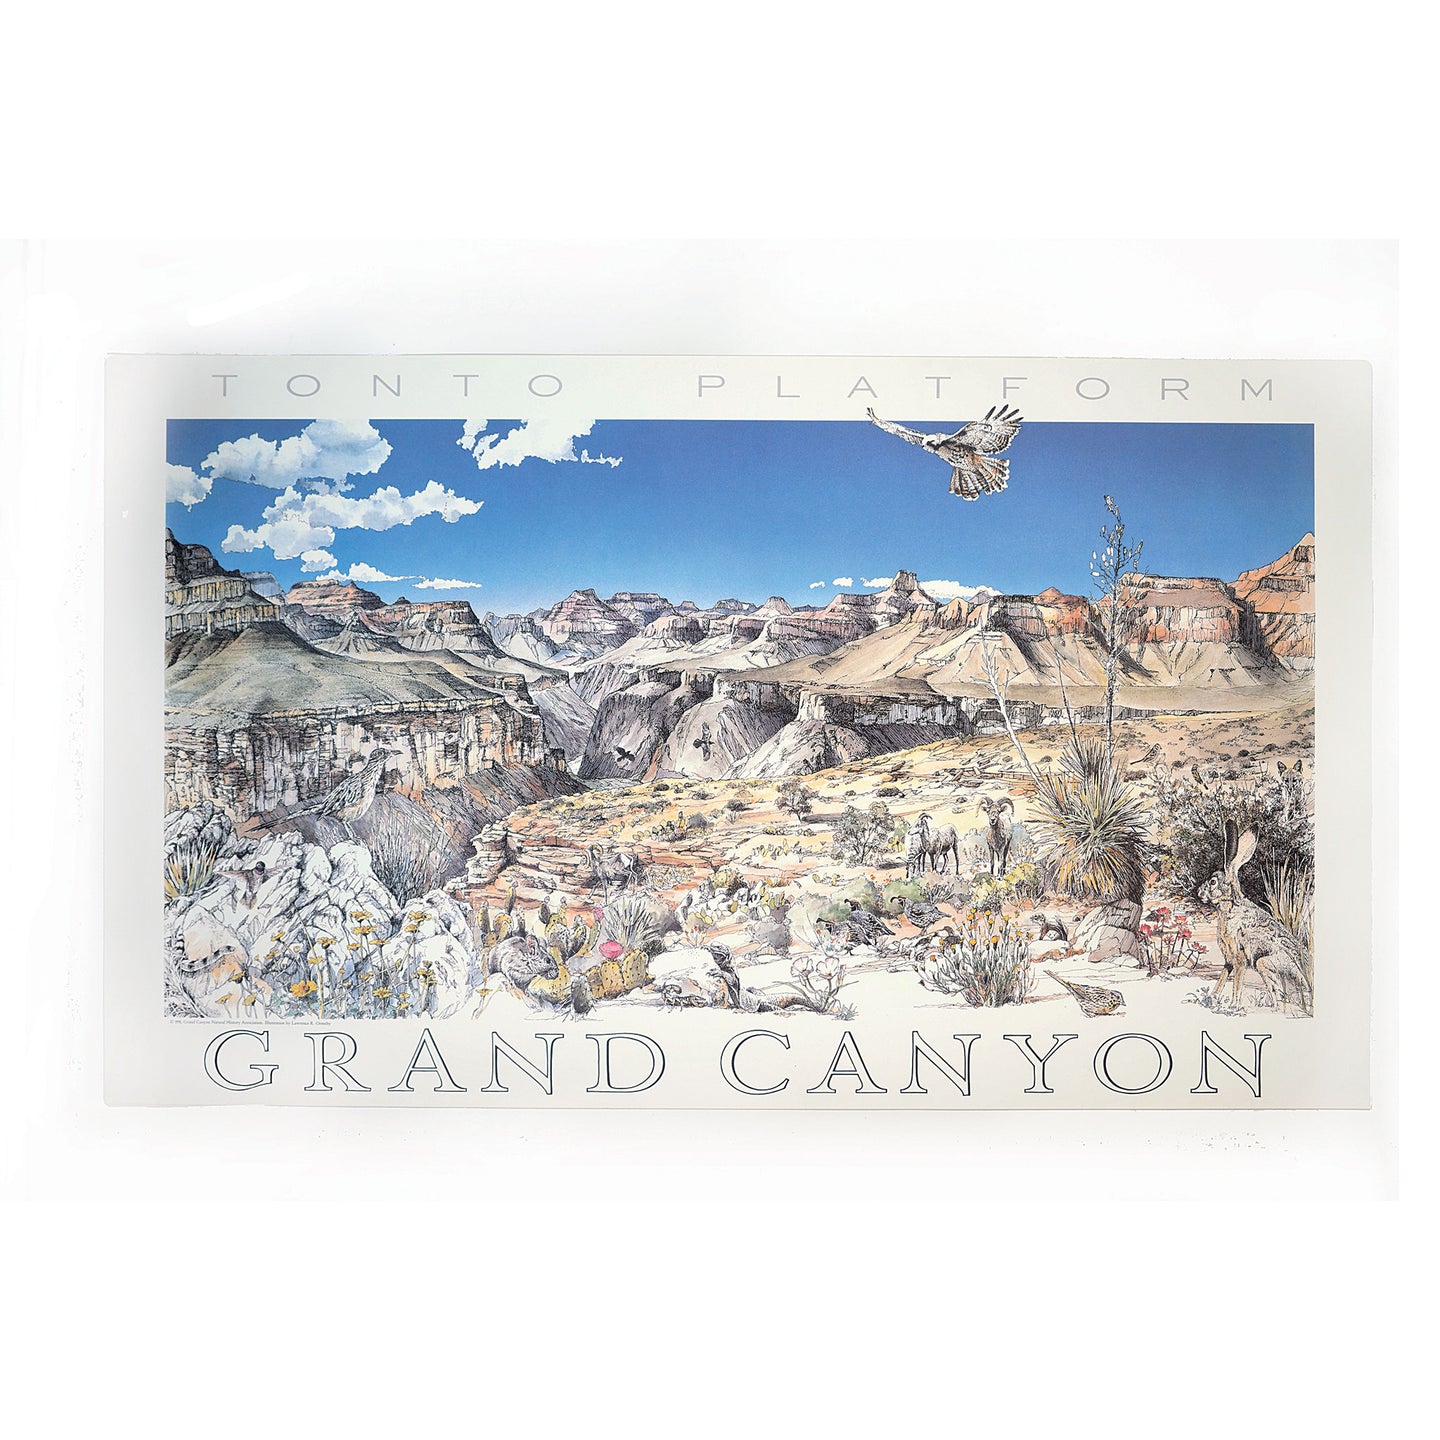 Tonto Plateau in the Canyon poster, Grand Canyon National Park, Arizona